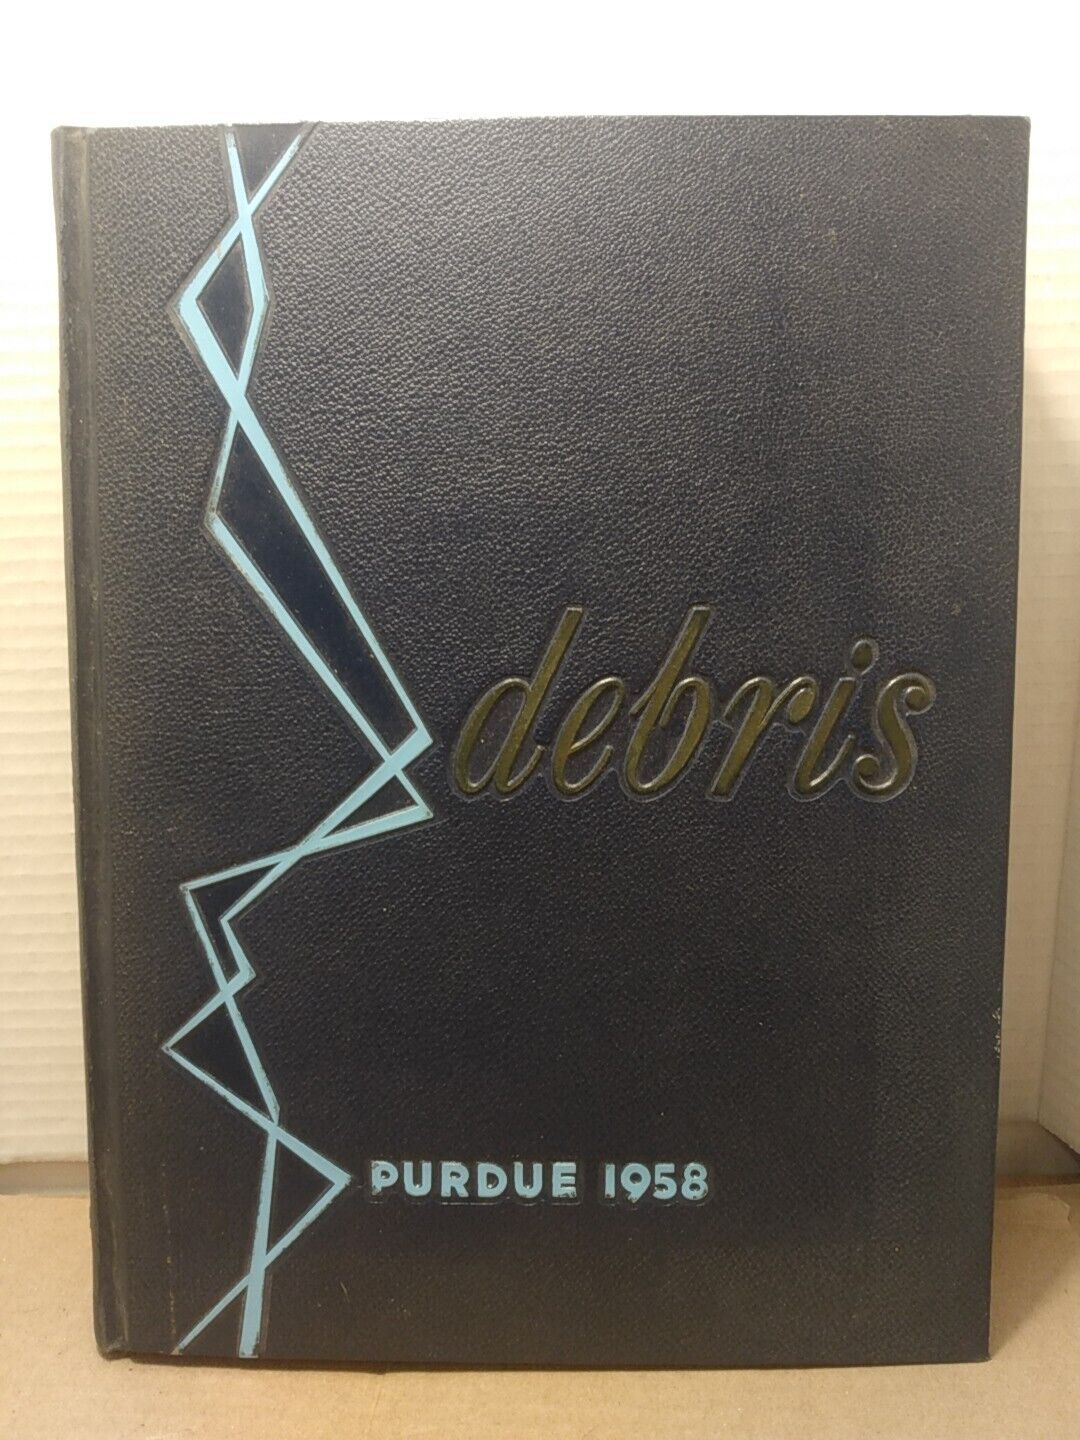 Purdue University Debris Yearbook 1958 HC Vintage 1950s West Lafayette, Indiana